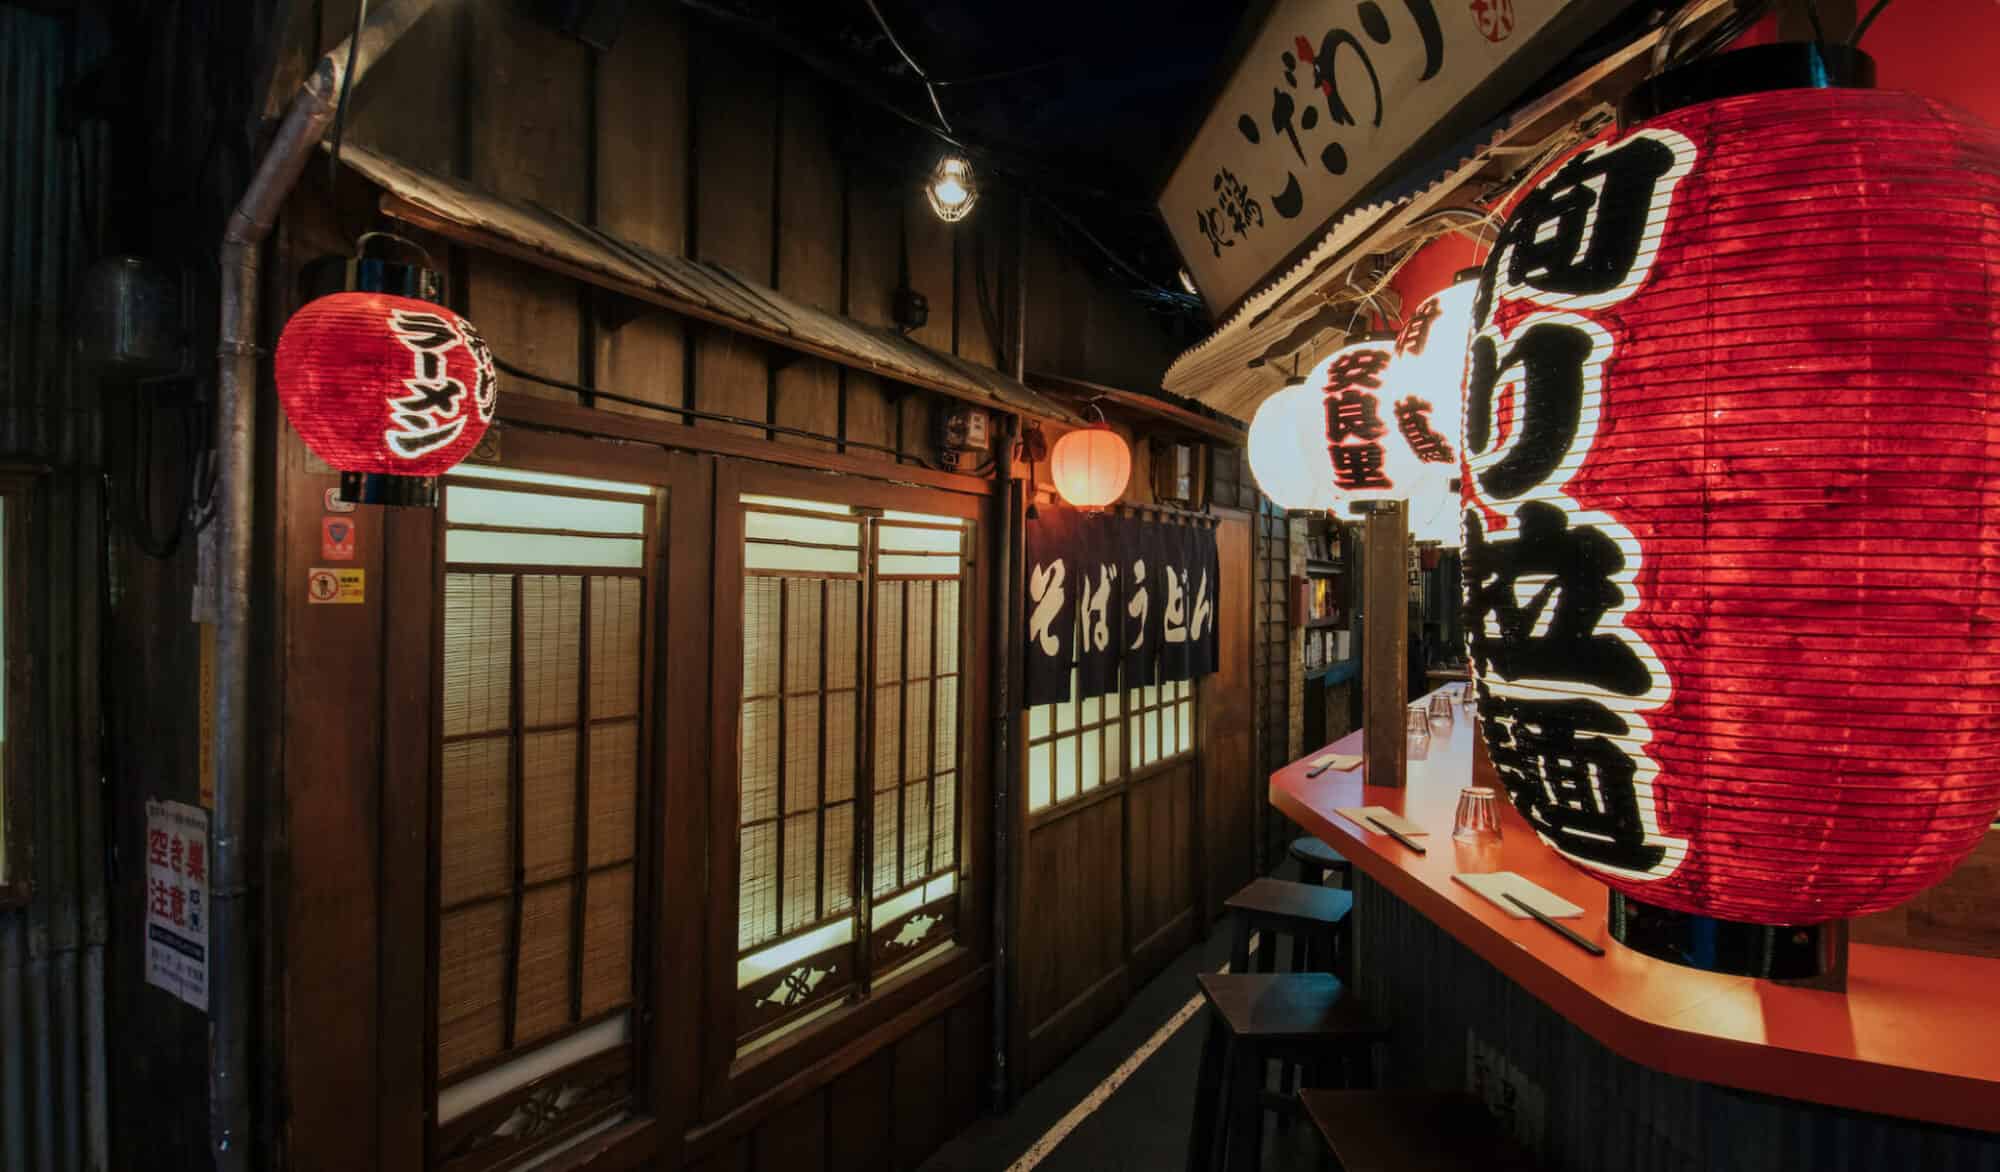 Inside Kodawari Ramen's Japanese market-inspired noodle bar, with Japanese paper windows and red lanterns.